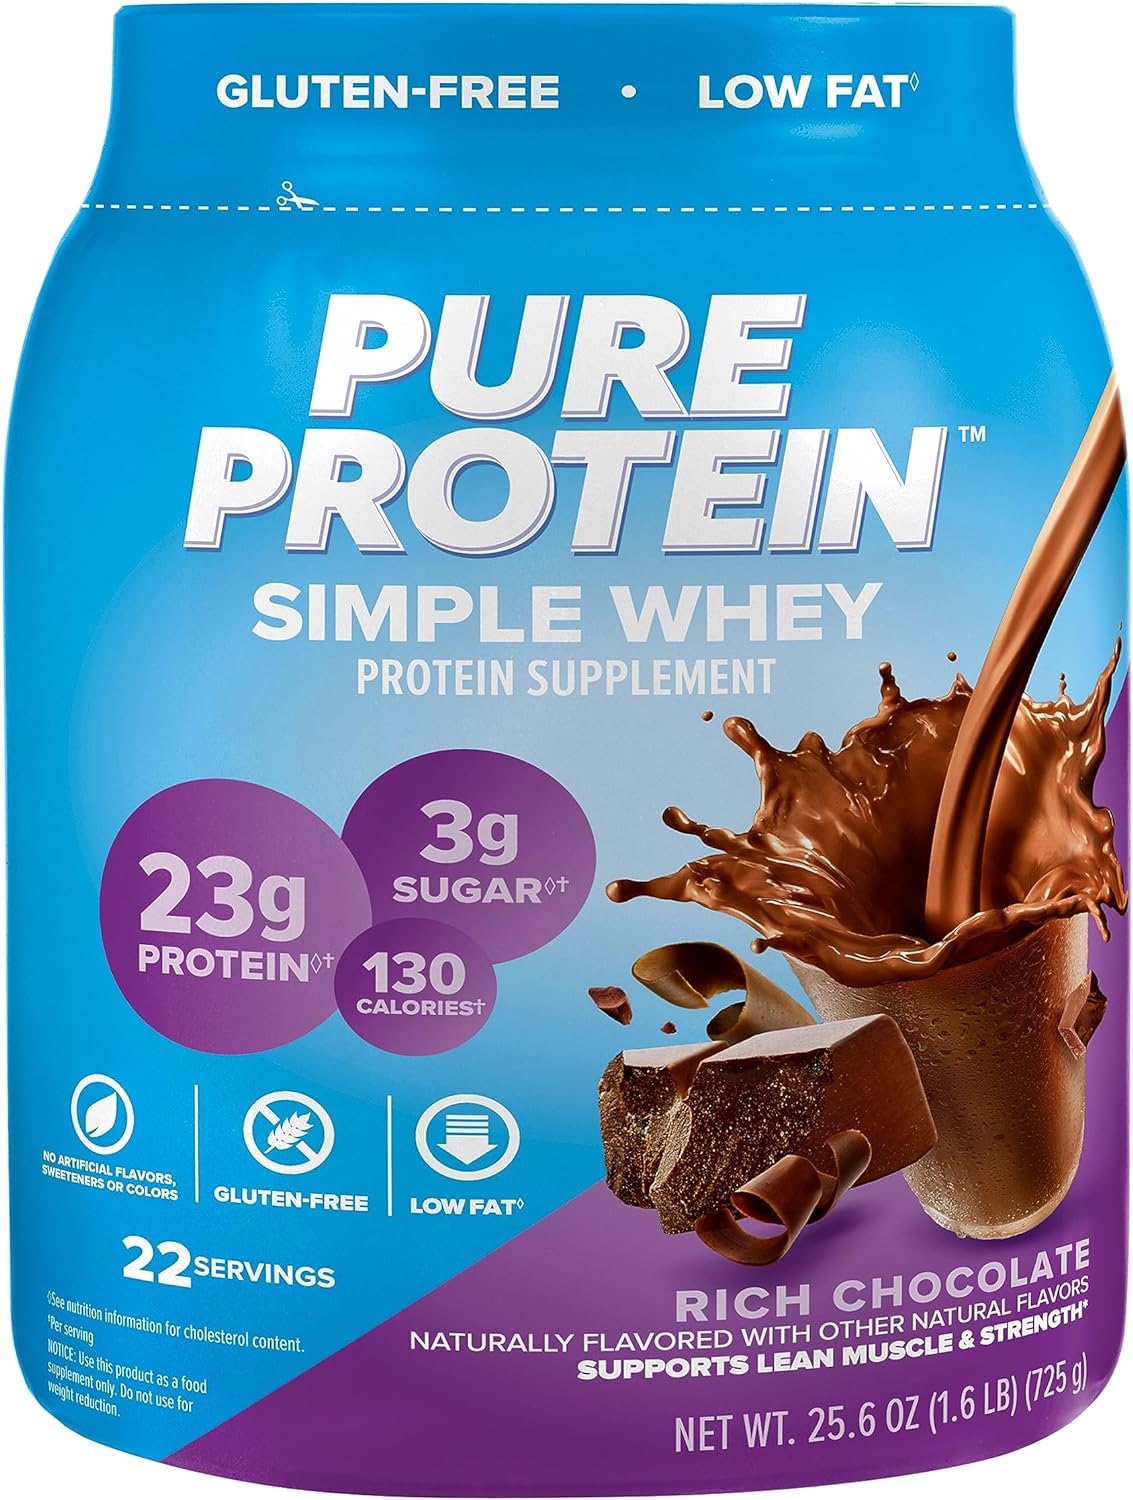 Pure Protein Simple Whey Protein Powder, Gluten Free, 23G Protein, Ric